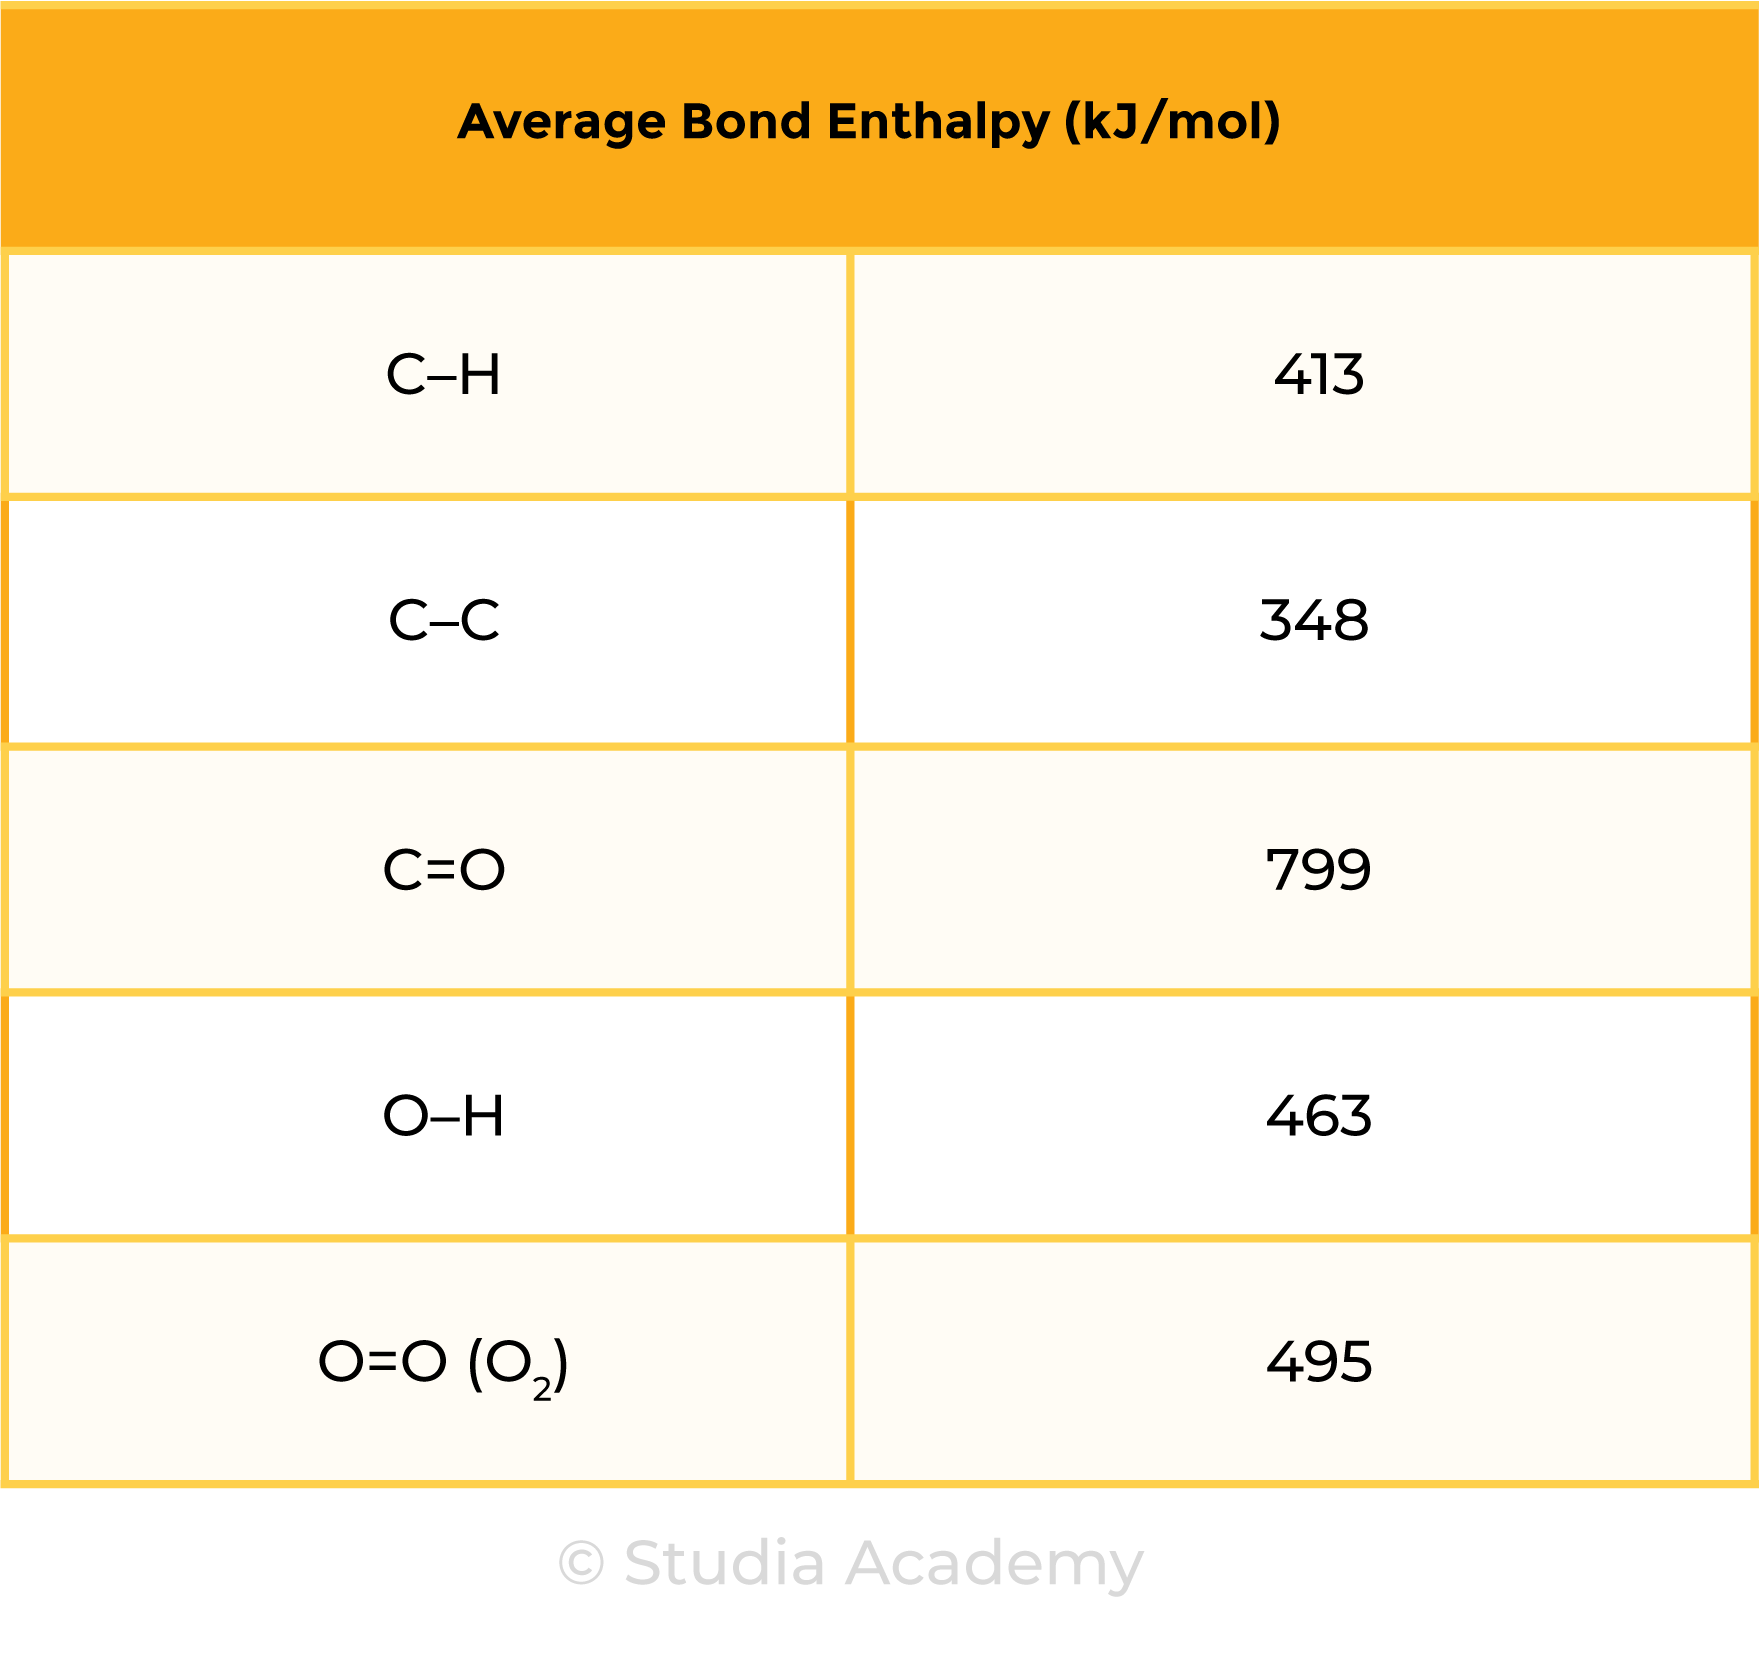 edexcel_igcse_chemistry_topic 18 tables_energetics_005_average bond enthalpies